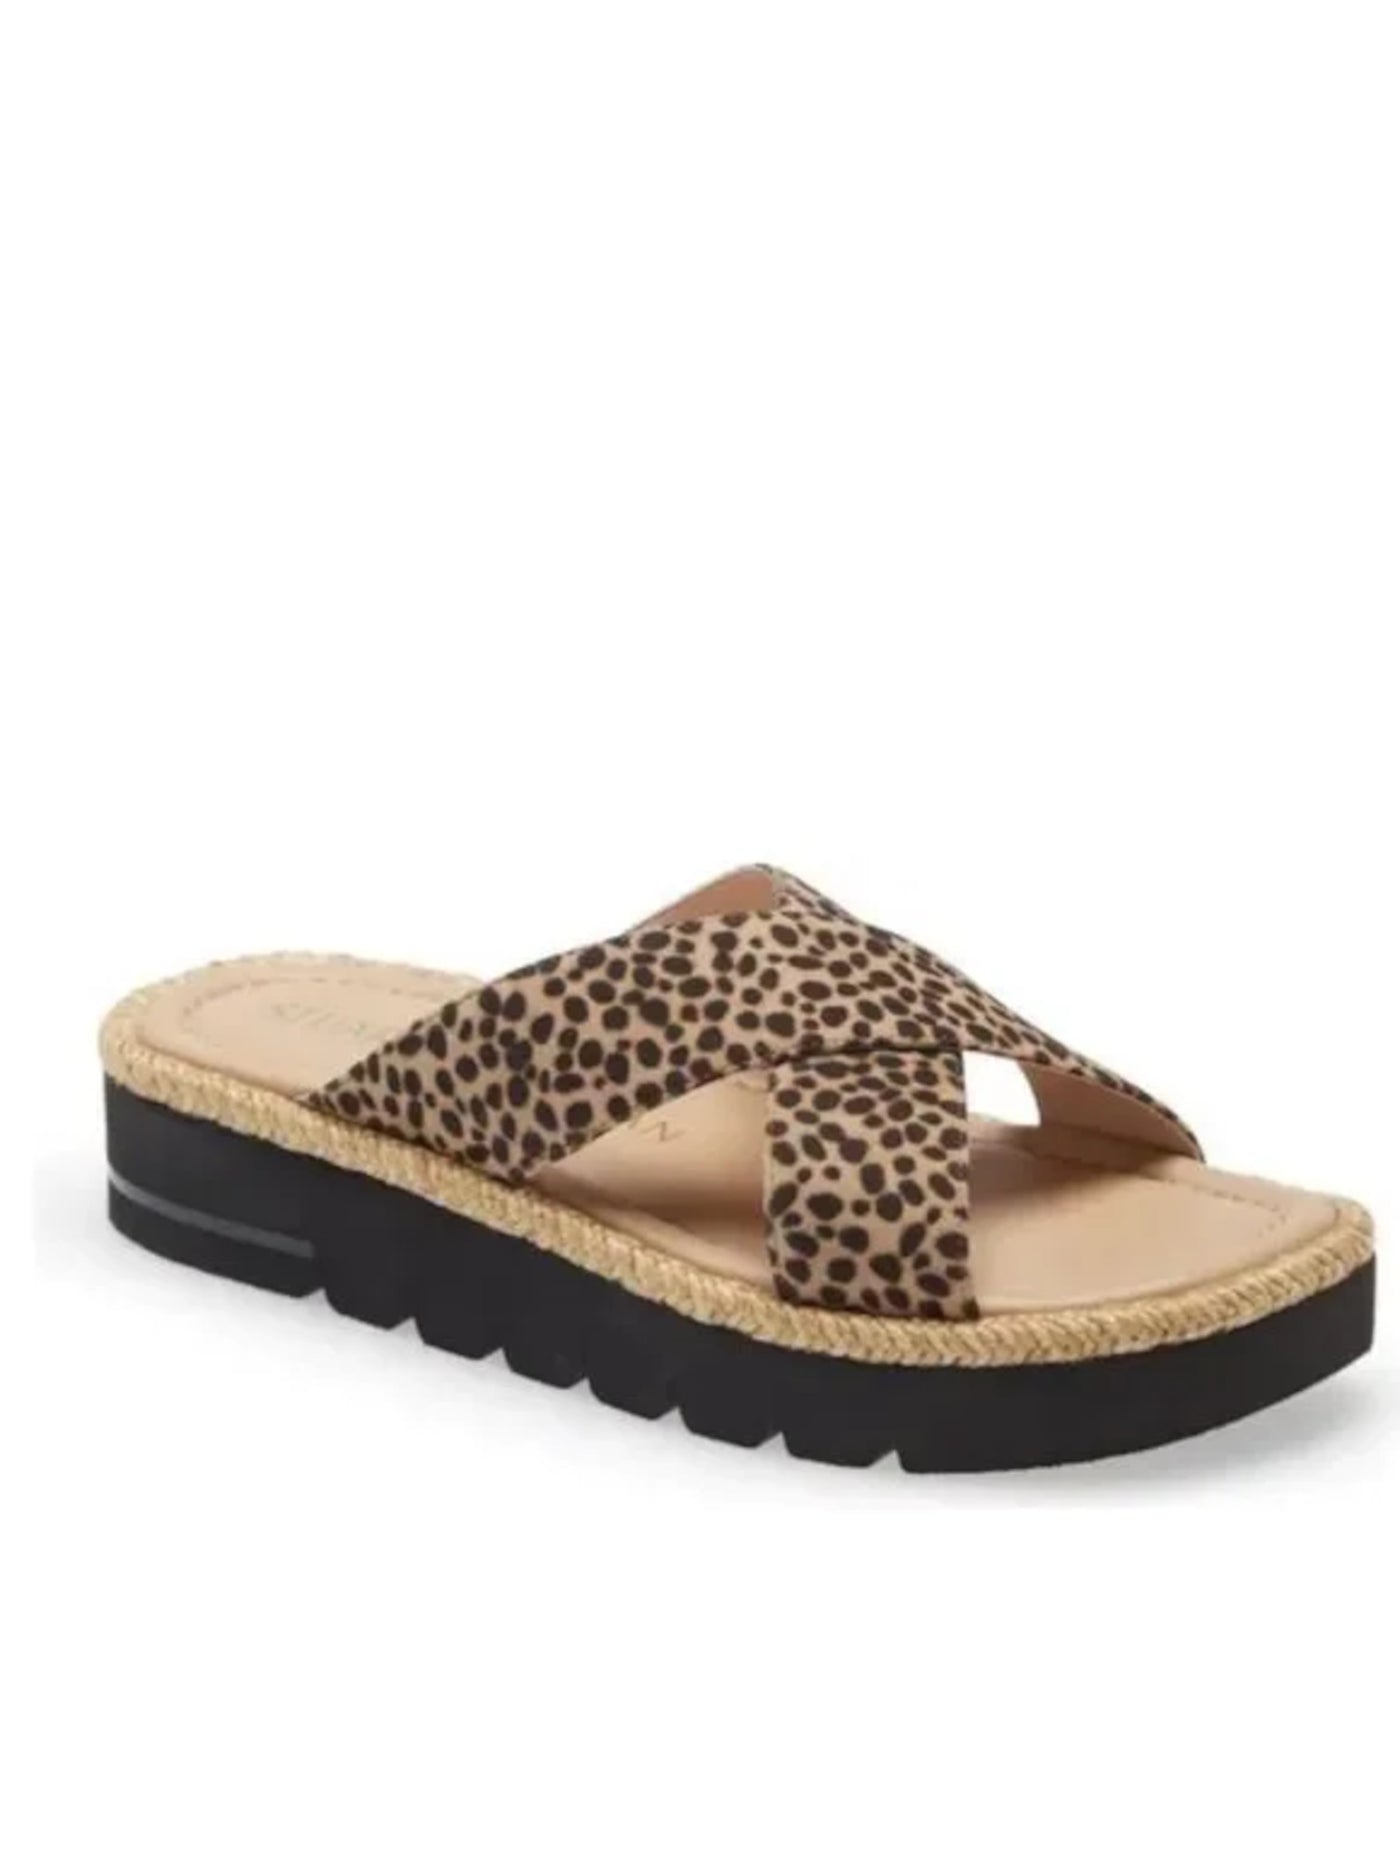 STUART WEITZMAN Womens Beige Animal Print Cushioned Braided Roza Square Toe Slip On Leather Slide Sandals Shoes 7.5 B